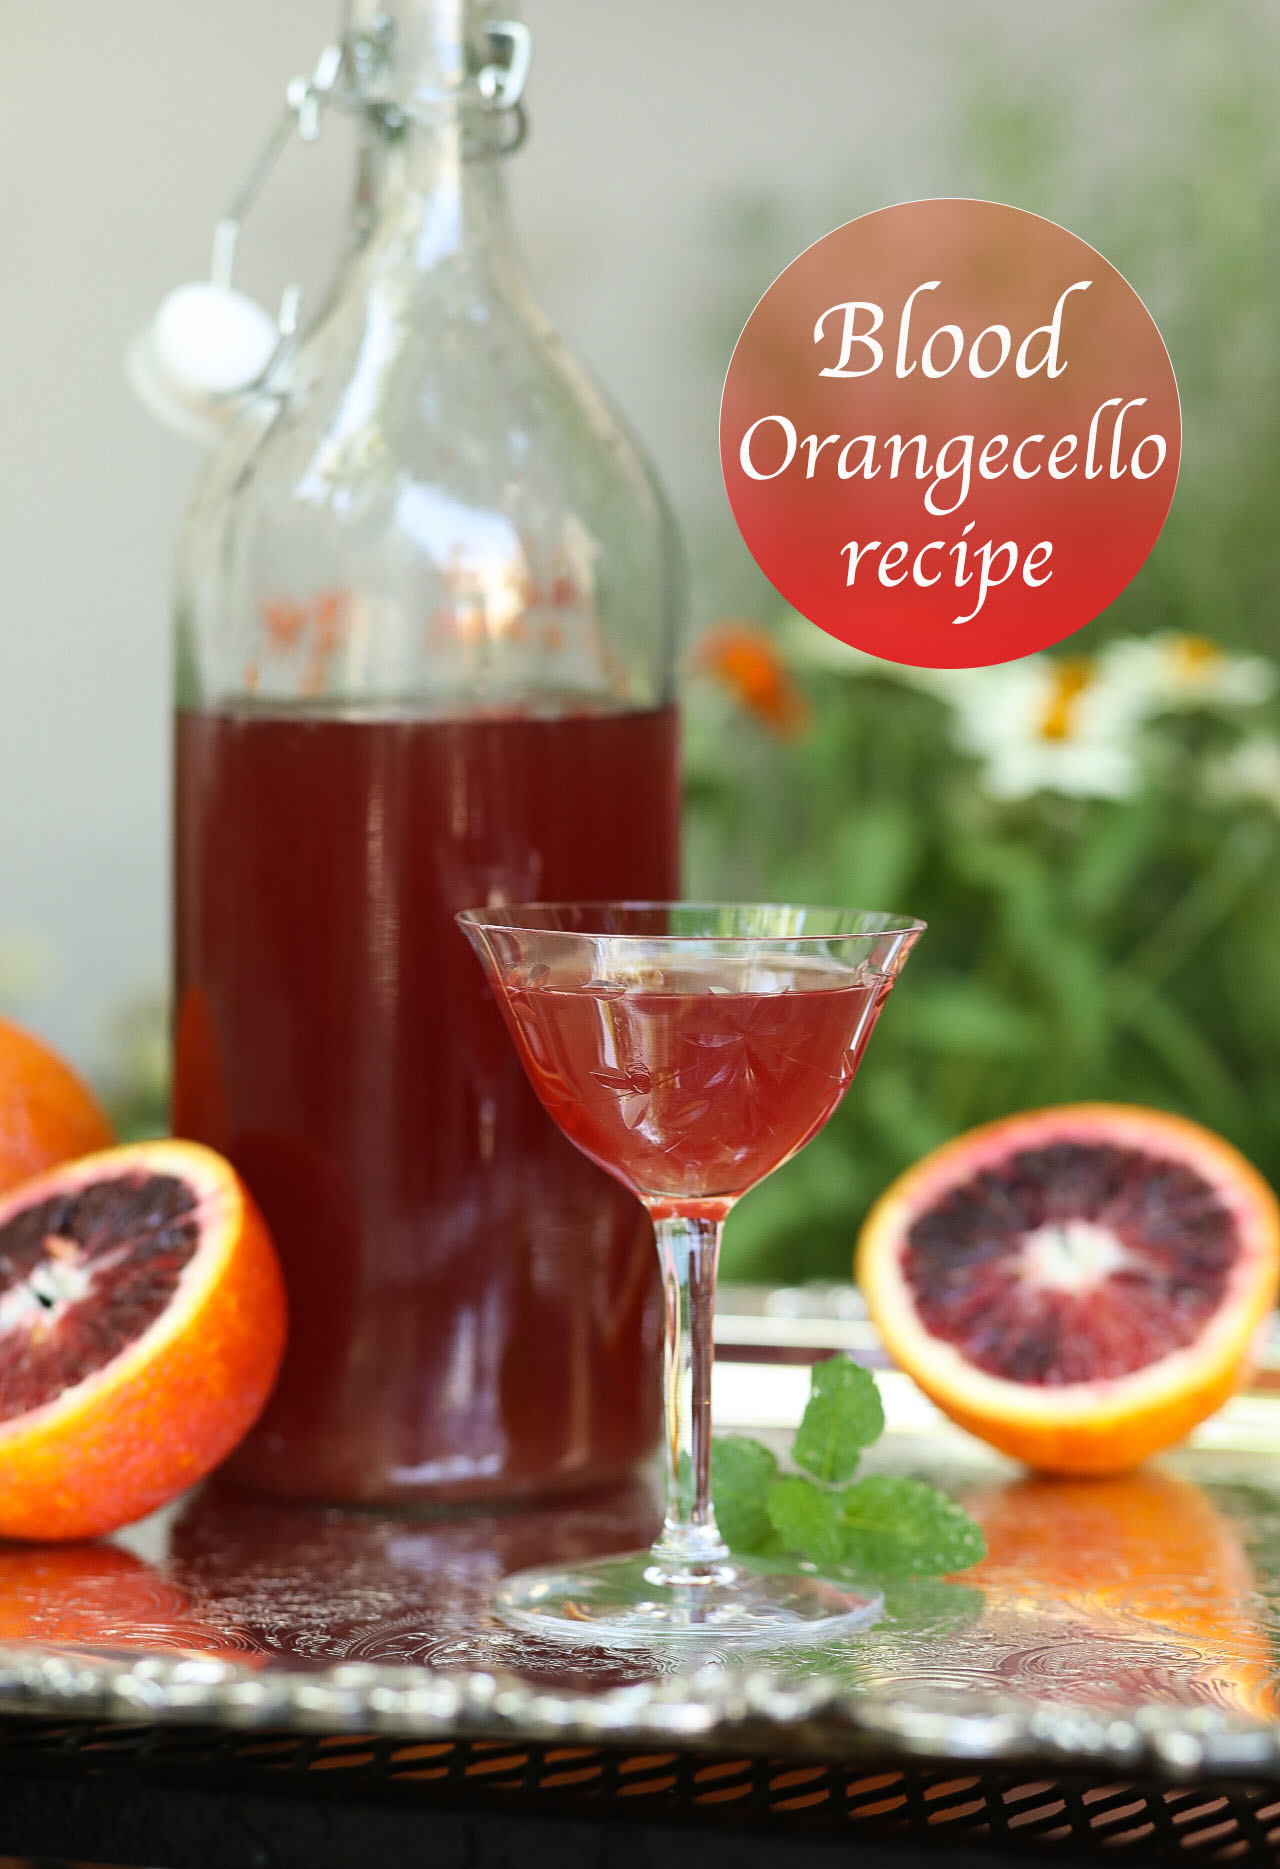 Blood Orangecello recipe | LOVE HAPPY HOUR